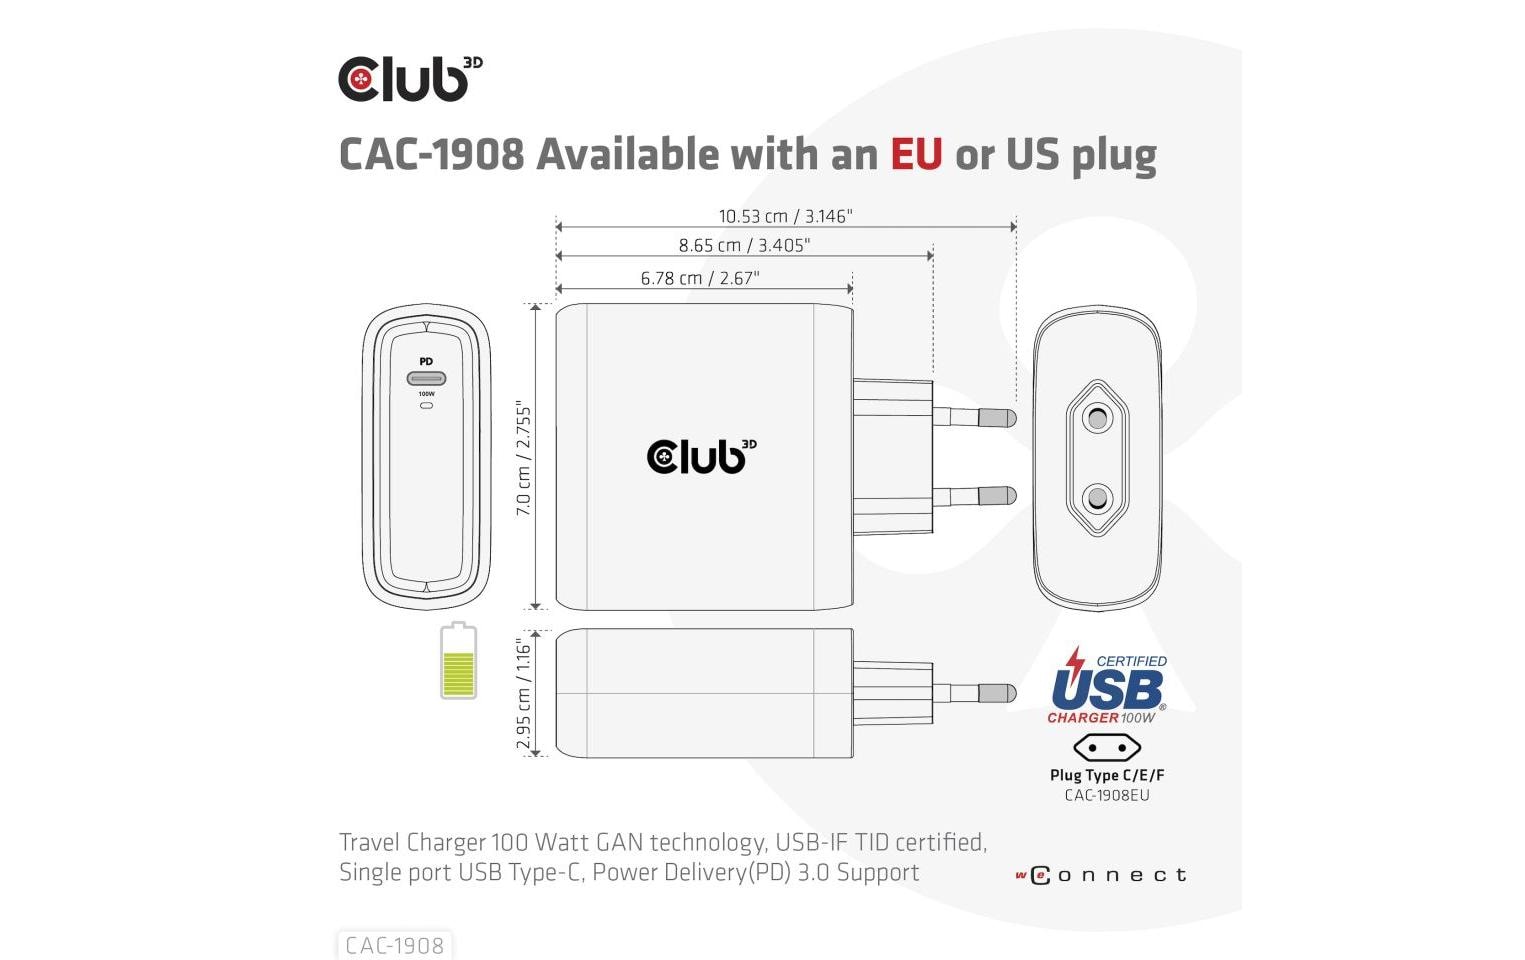 Club 3D USB-Wandladegerät CAC-1908